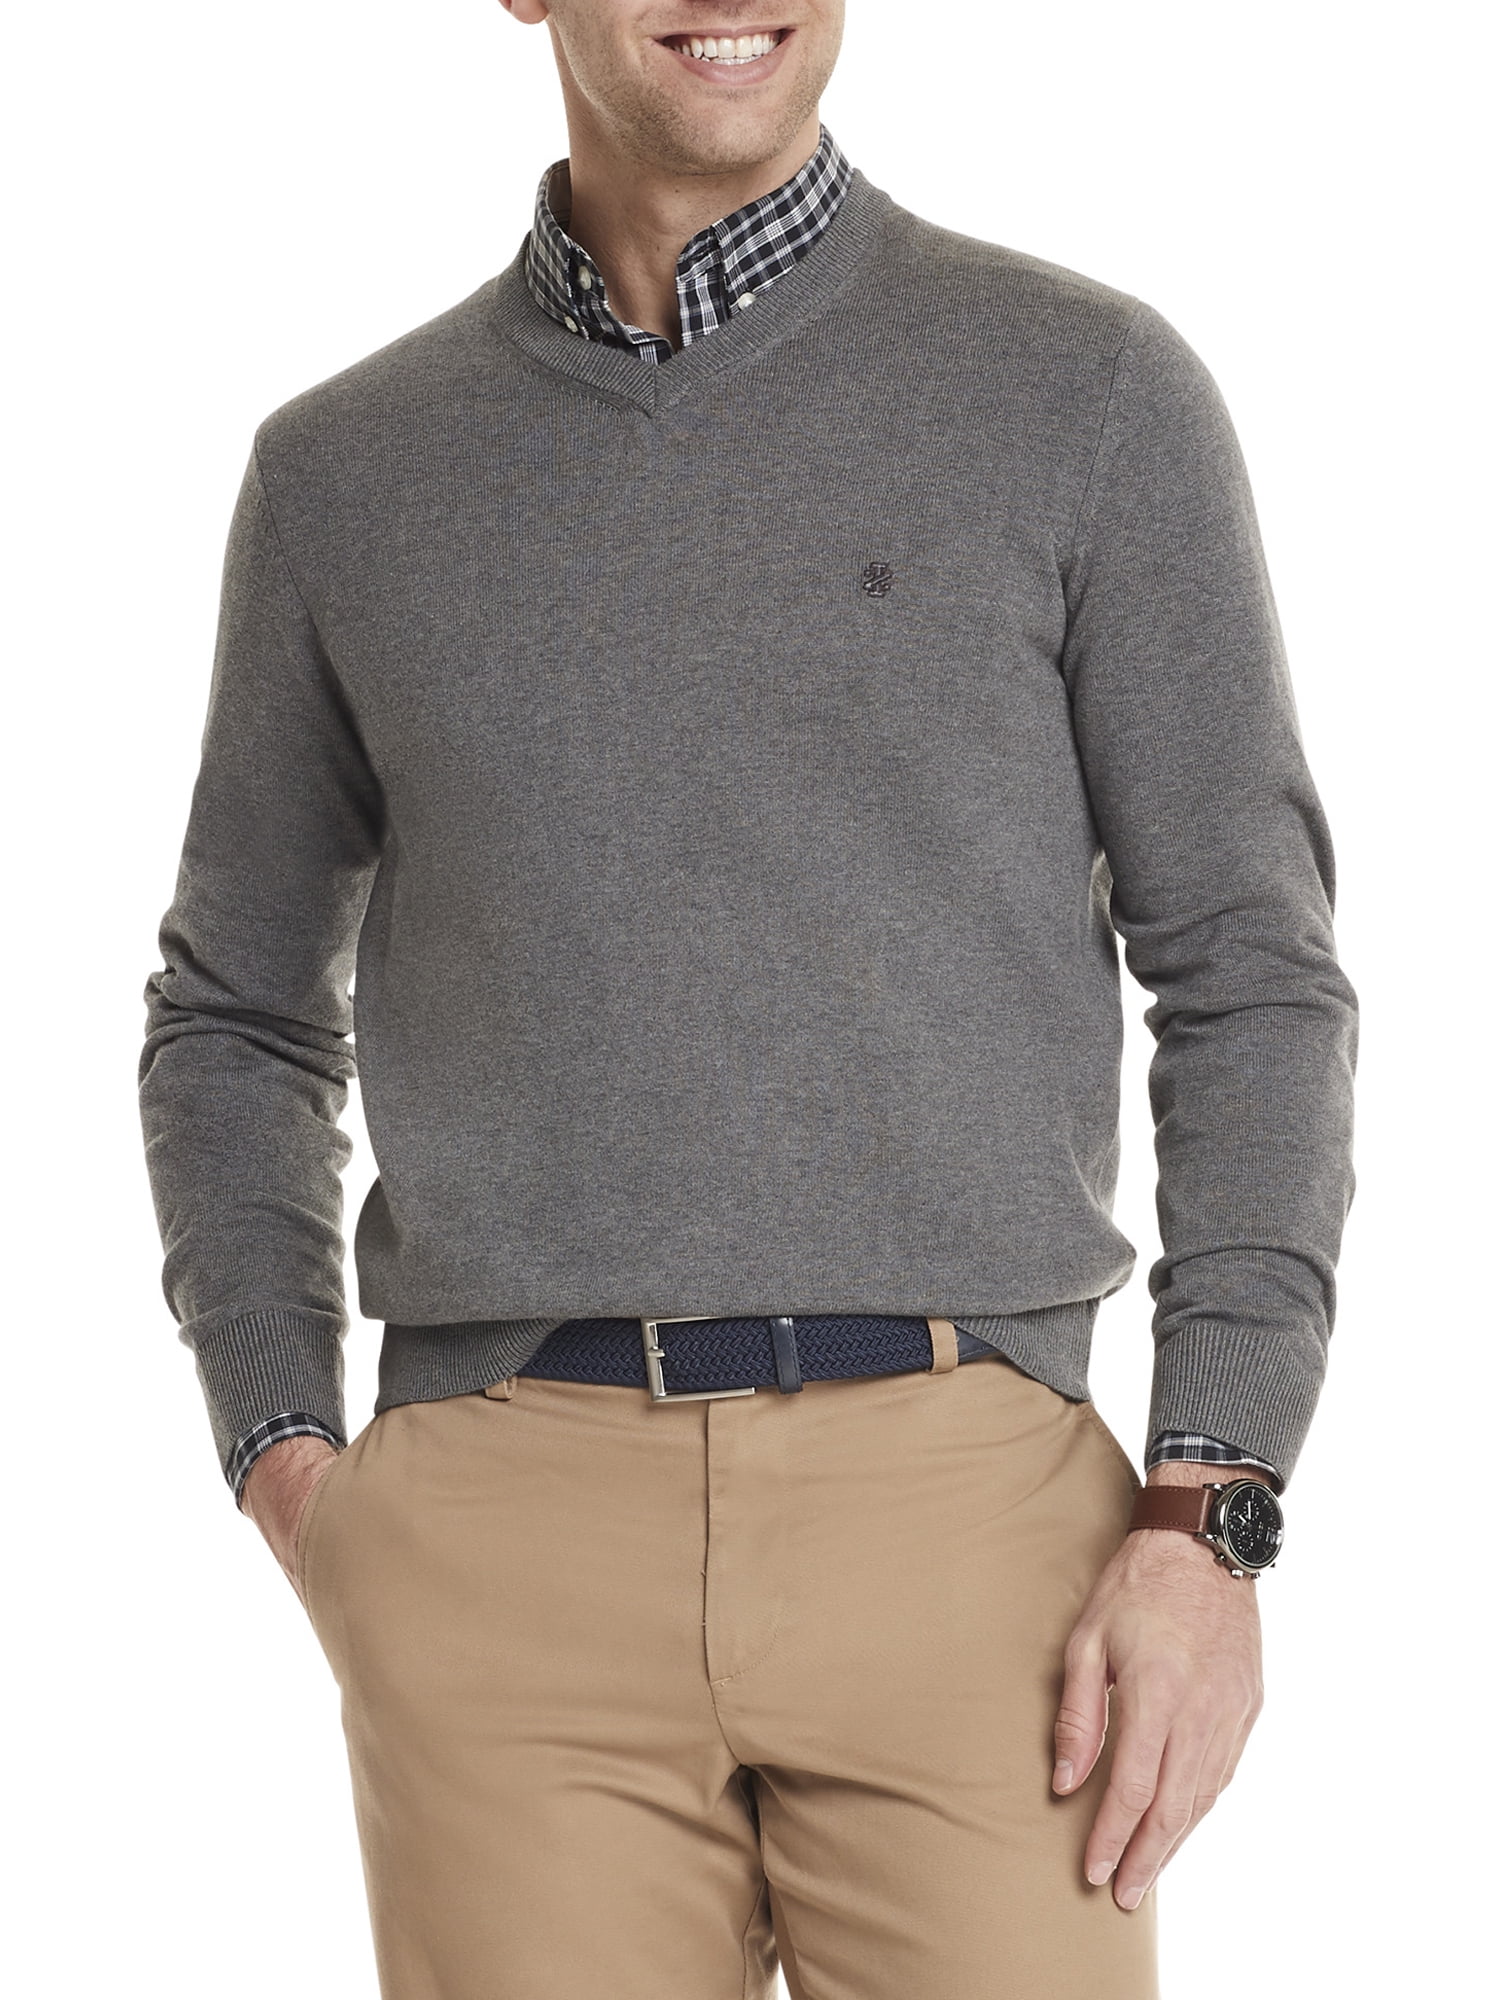 IZOD Lightweight Fine Gauge Knit Cotton Men's V-Neck Sweater New Tags 